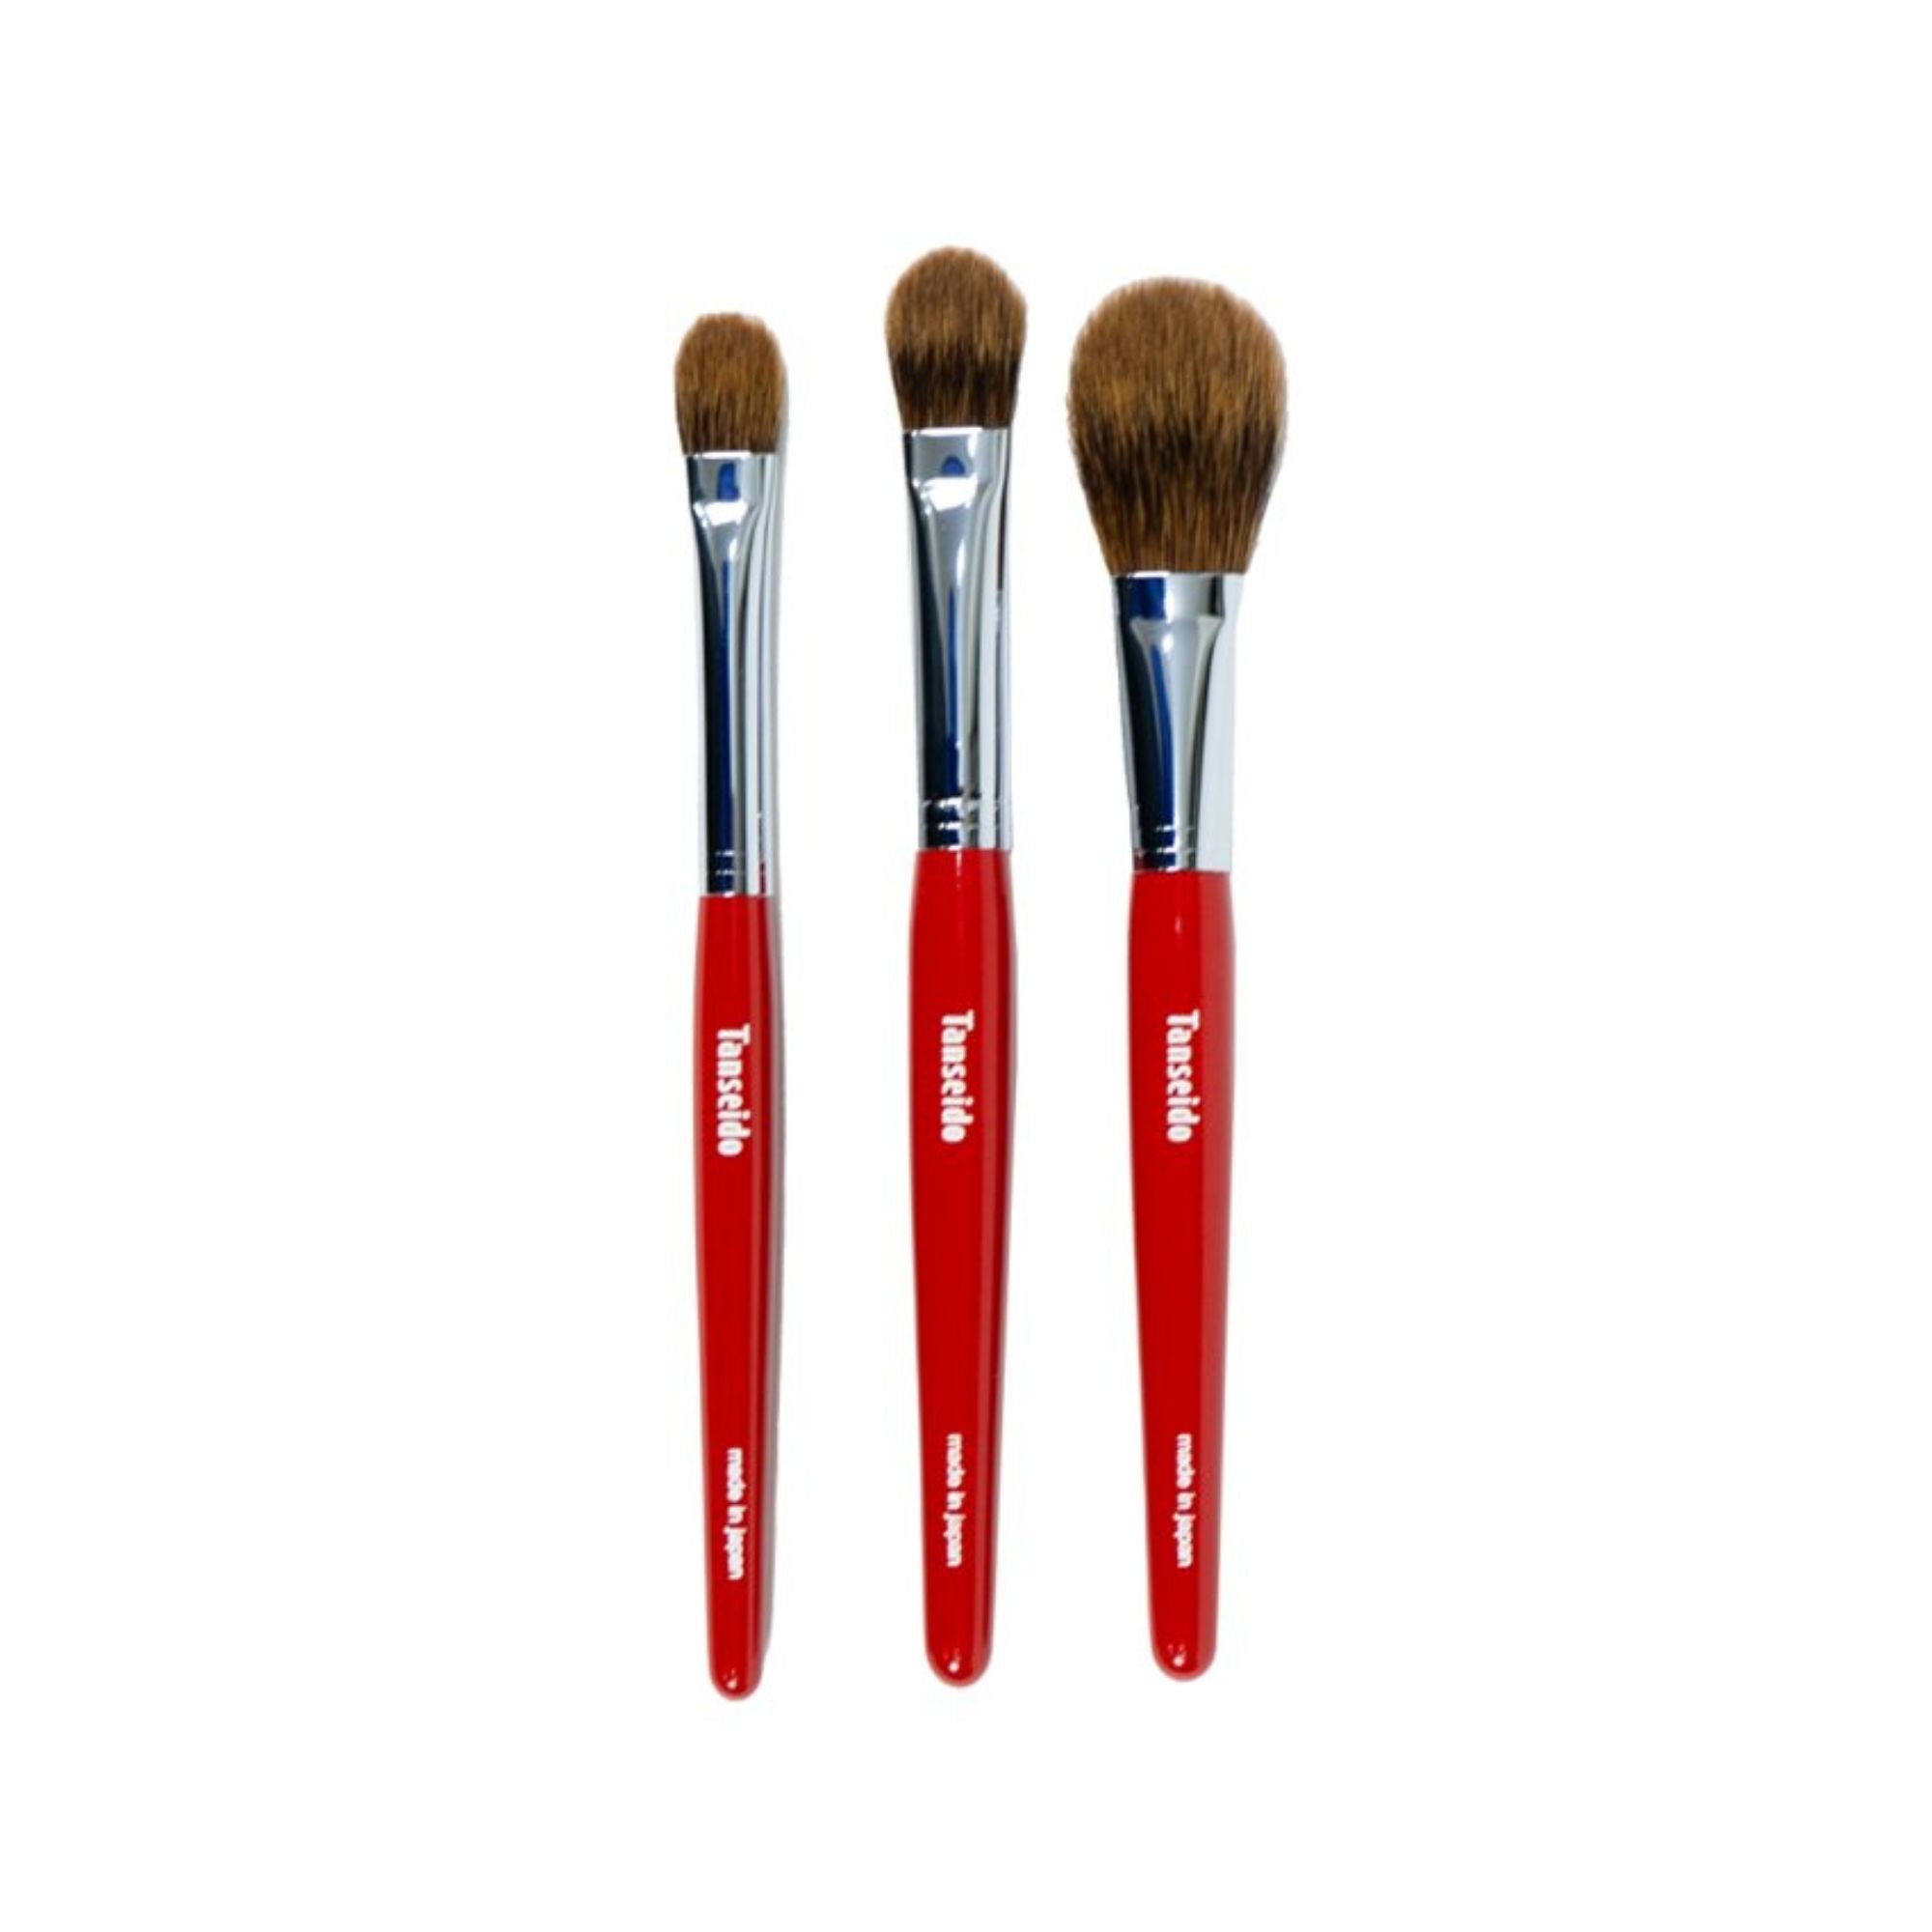 Tanseido CQ Eyeshadow/Mutlitask Set (SP3) - Fude Beauty, Japanese Makeup Brushes